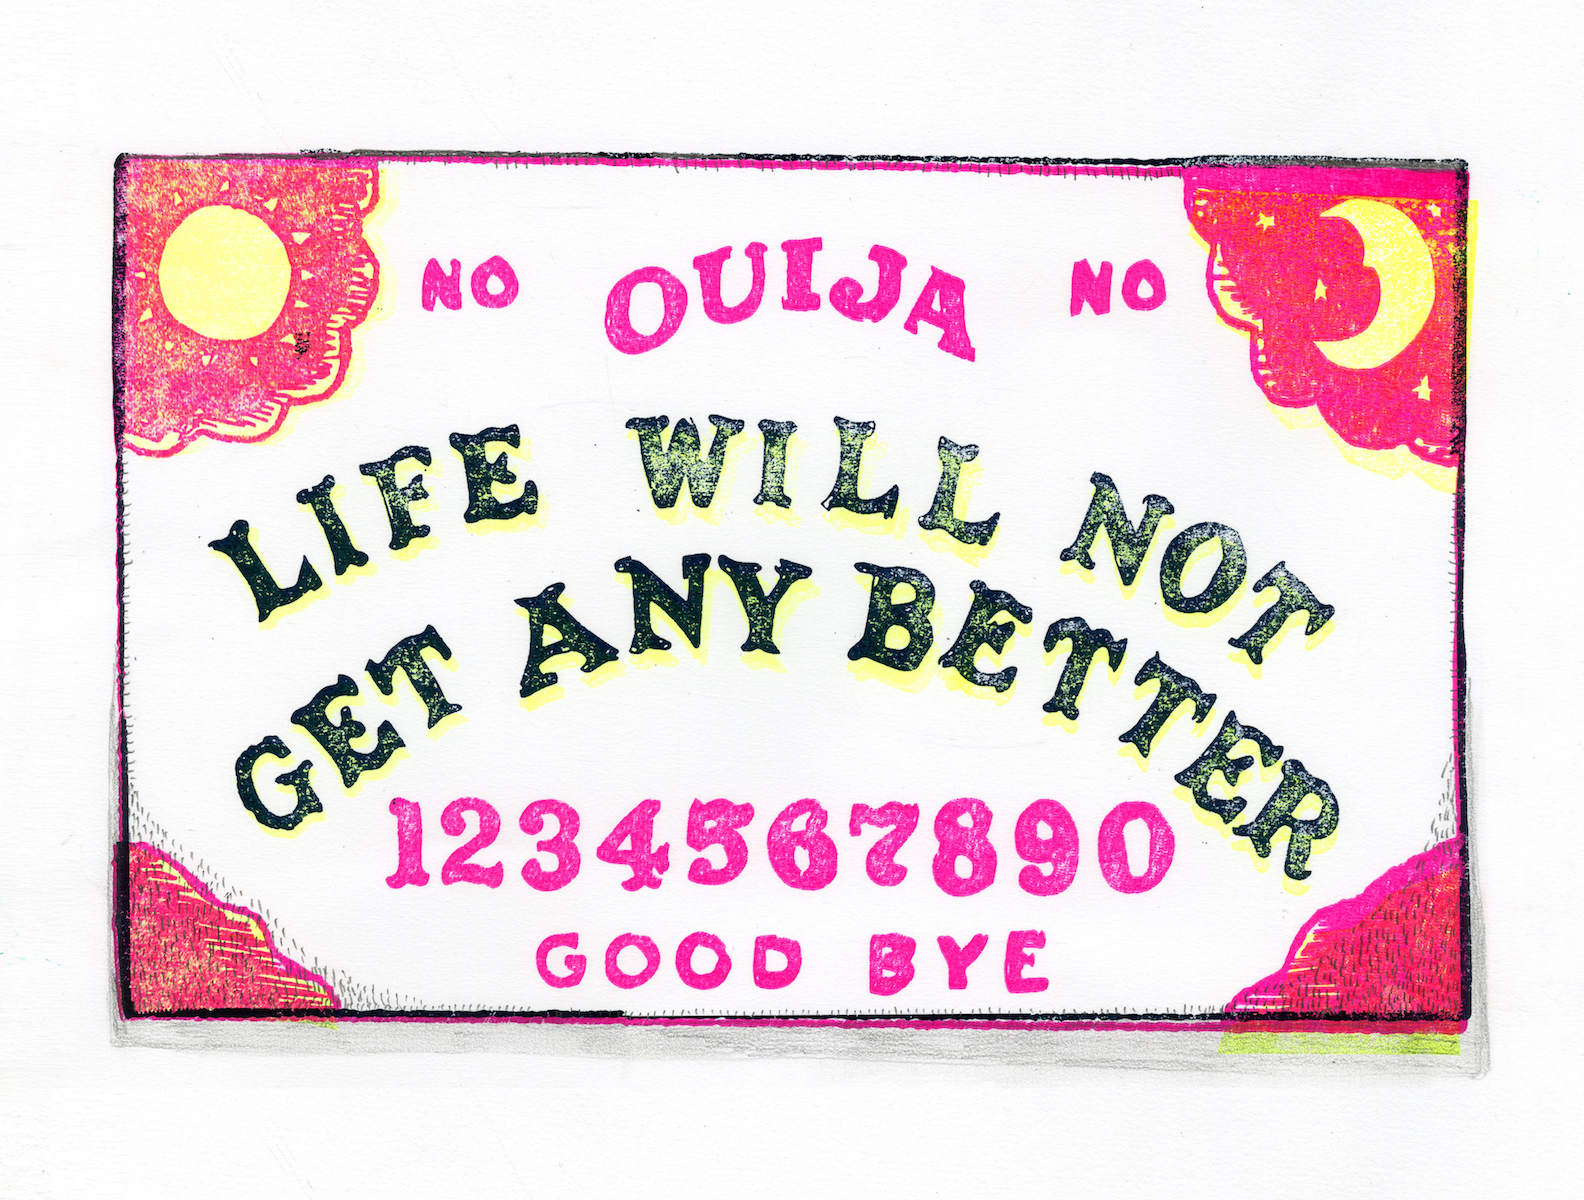 Arcane Pop Ouija Board by Sarah Evenson